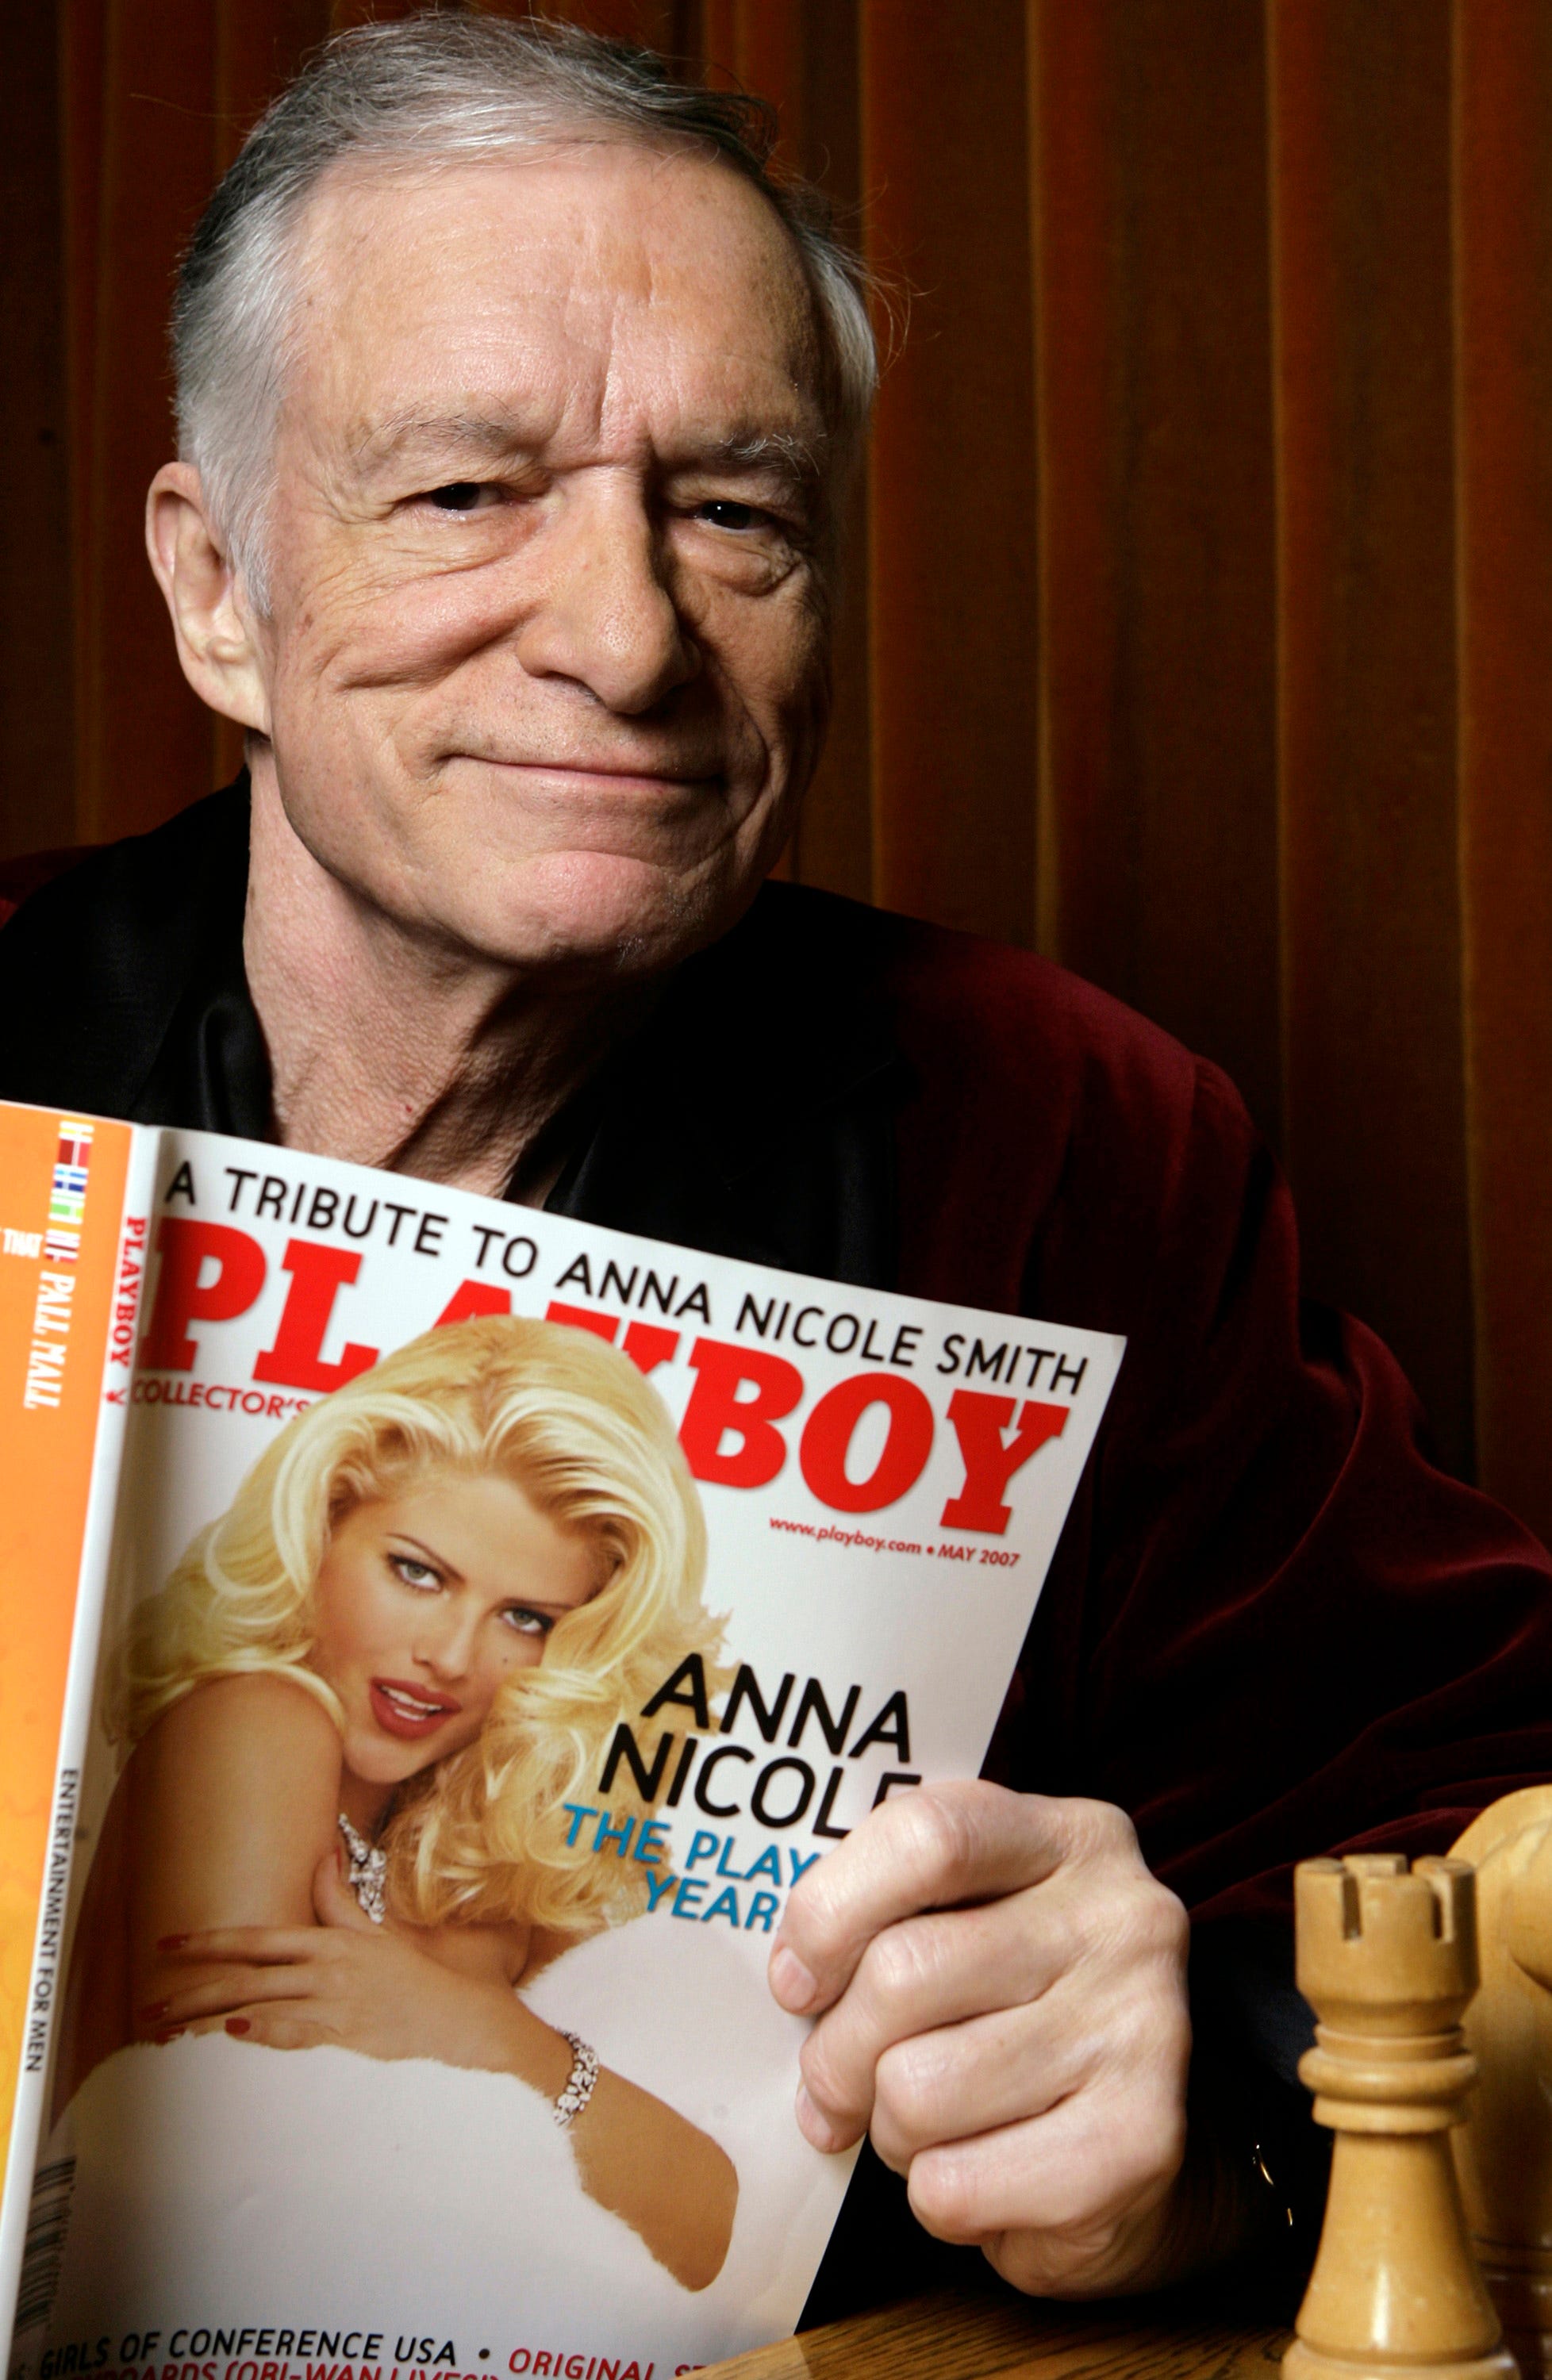 Hard Xxx In Girls Death - Secrets of Playboy': Hugh Hefner docuseries' biggest allegations